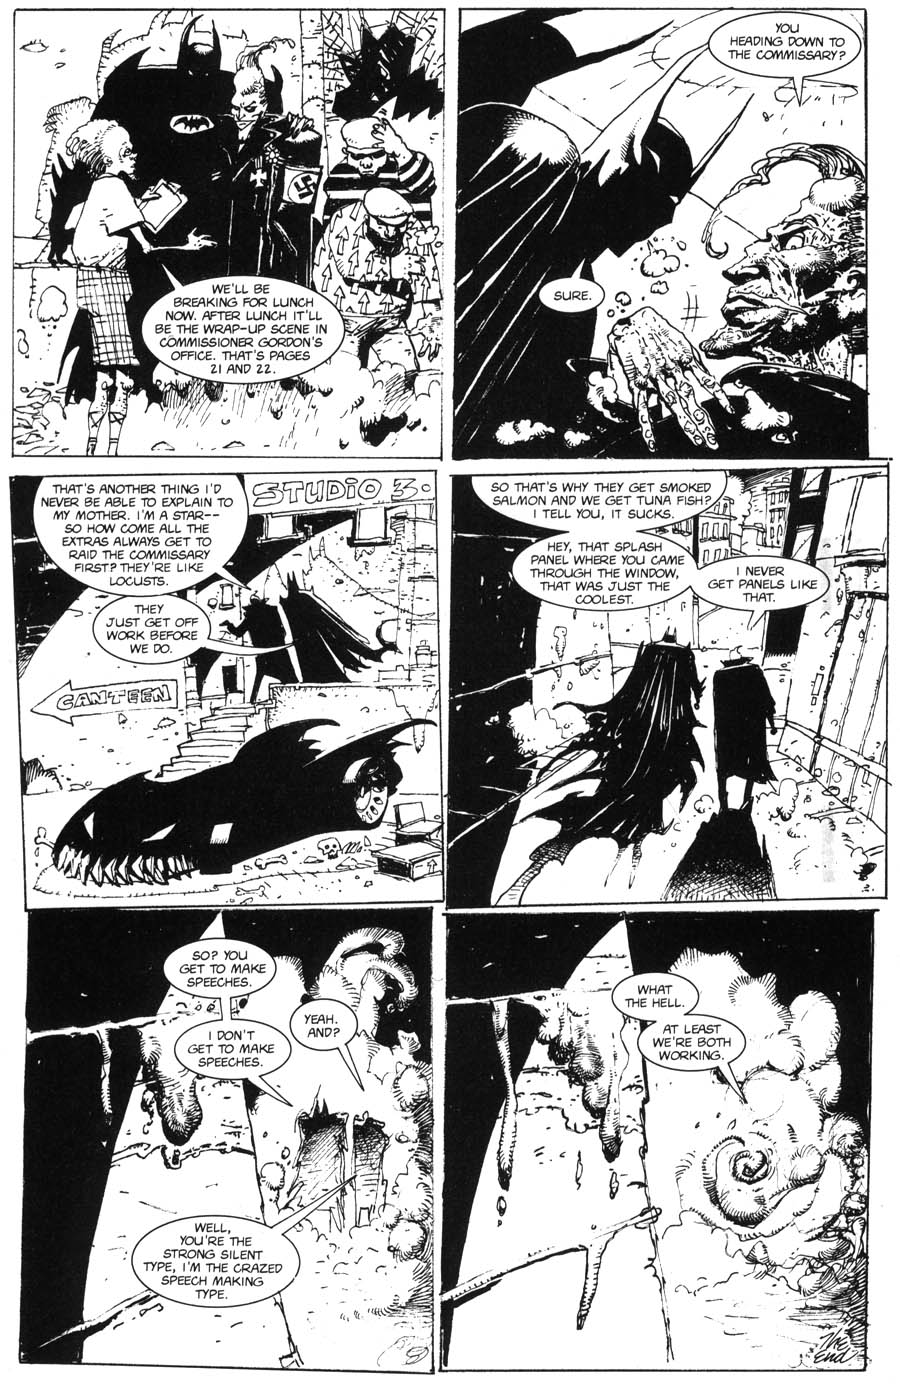 Batman - Black And White 2, Part 2 of 2